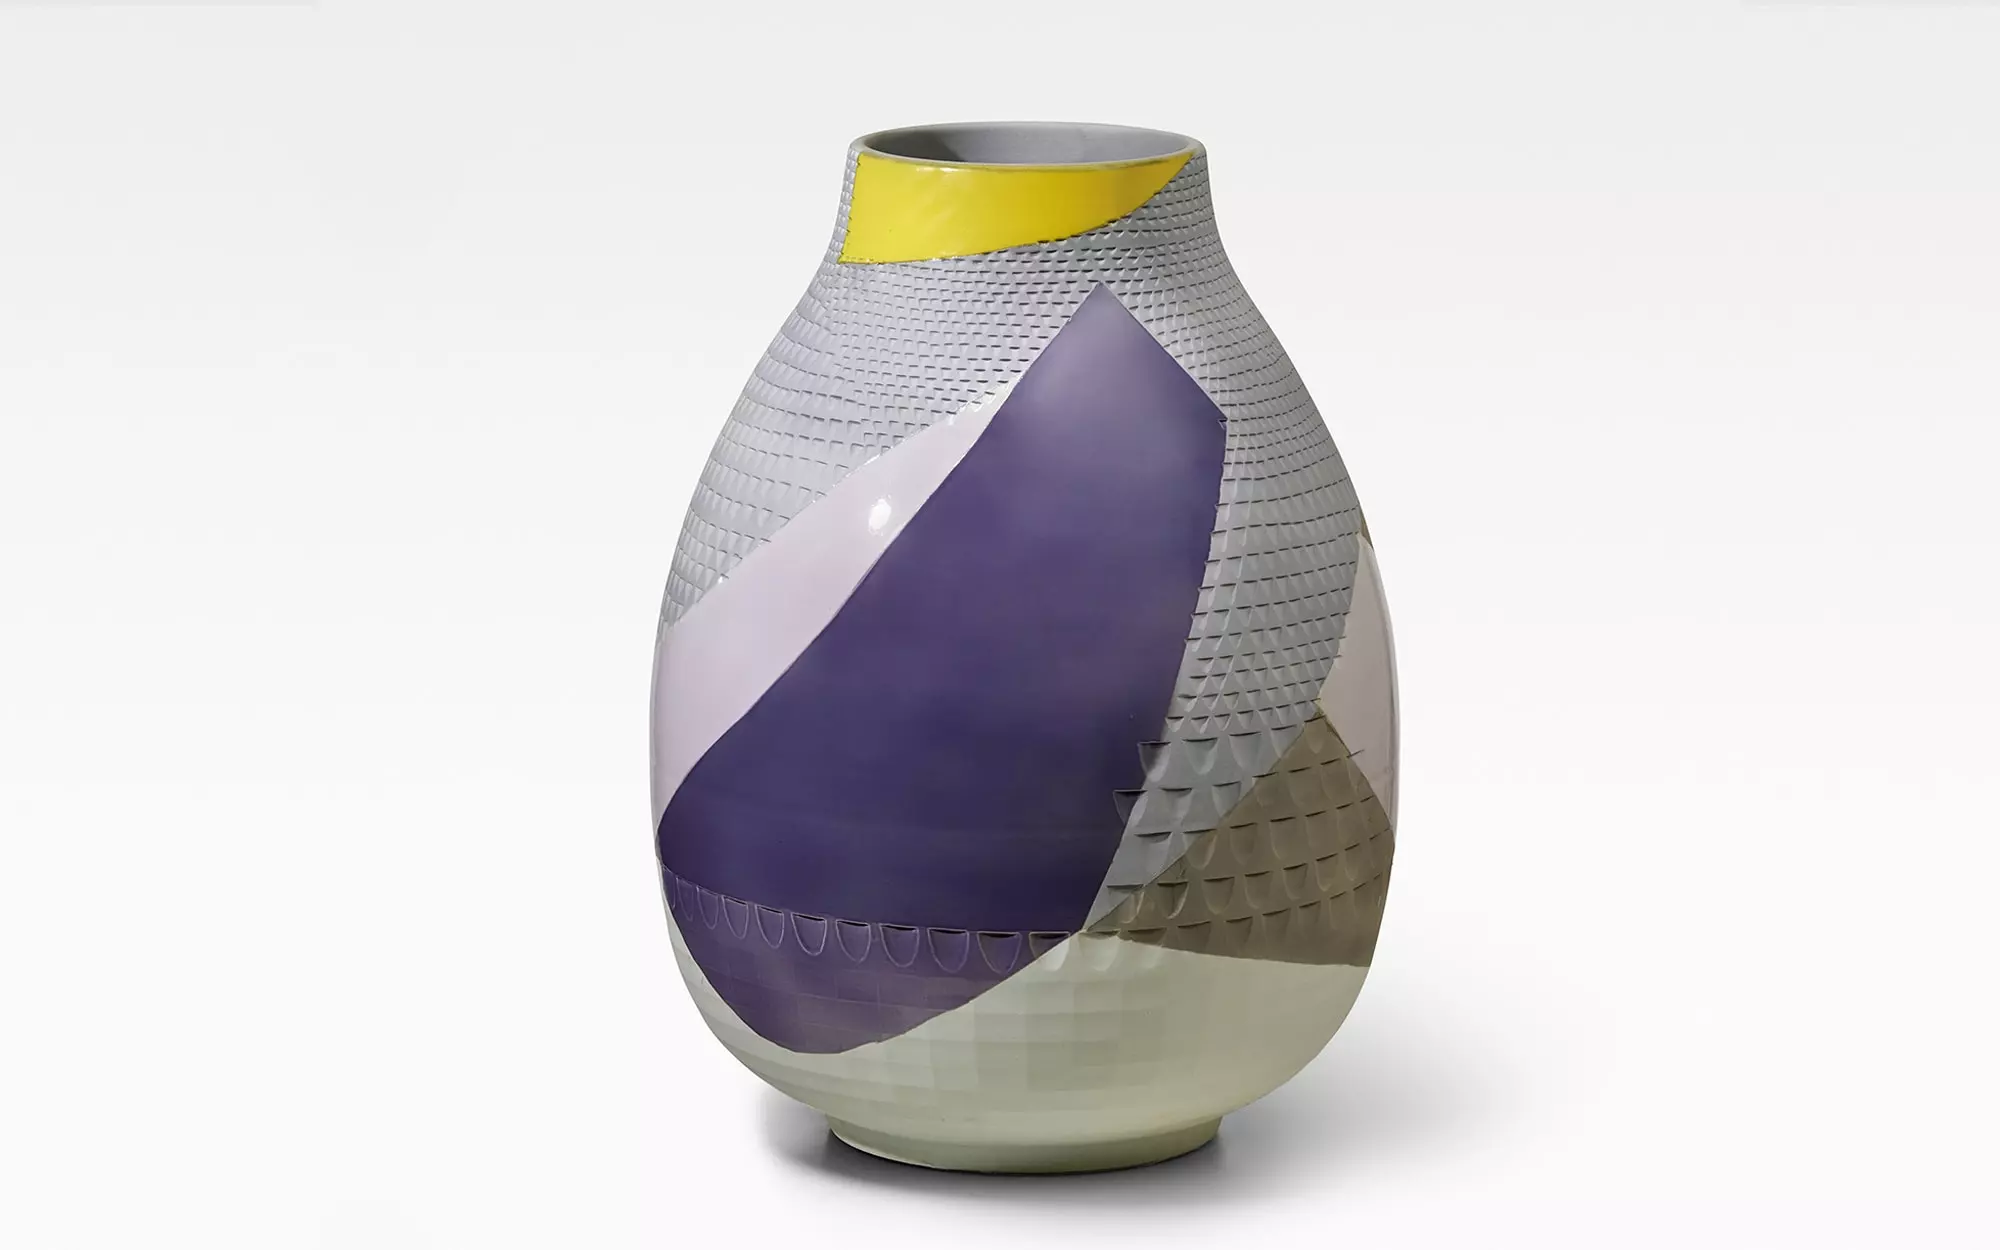 Diamond Vase - Day - Hella Jongerius - Lucas Ratton x kamel mennour x Galerie kreo @Saint-Tropez.